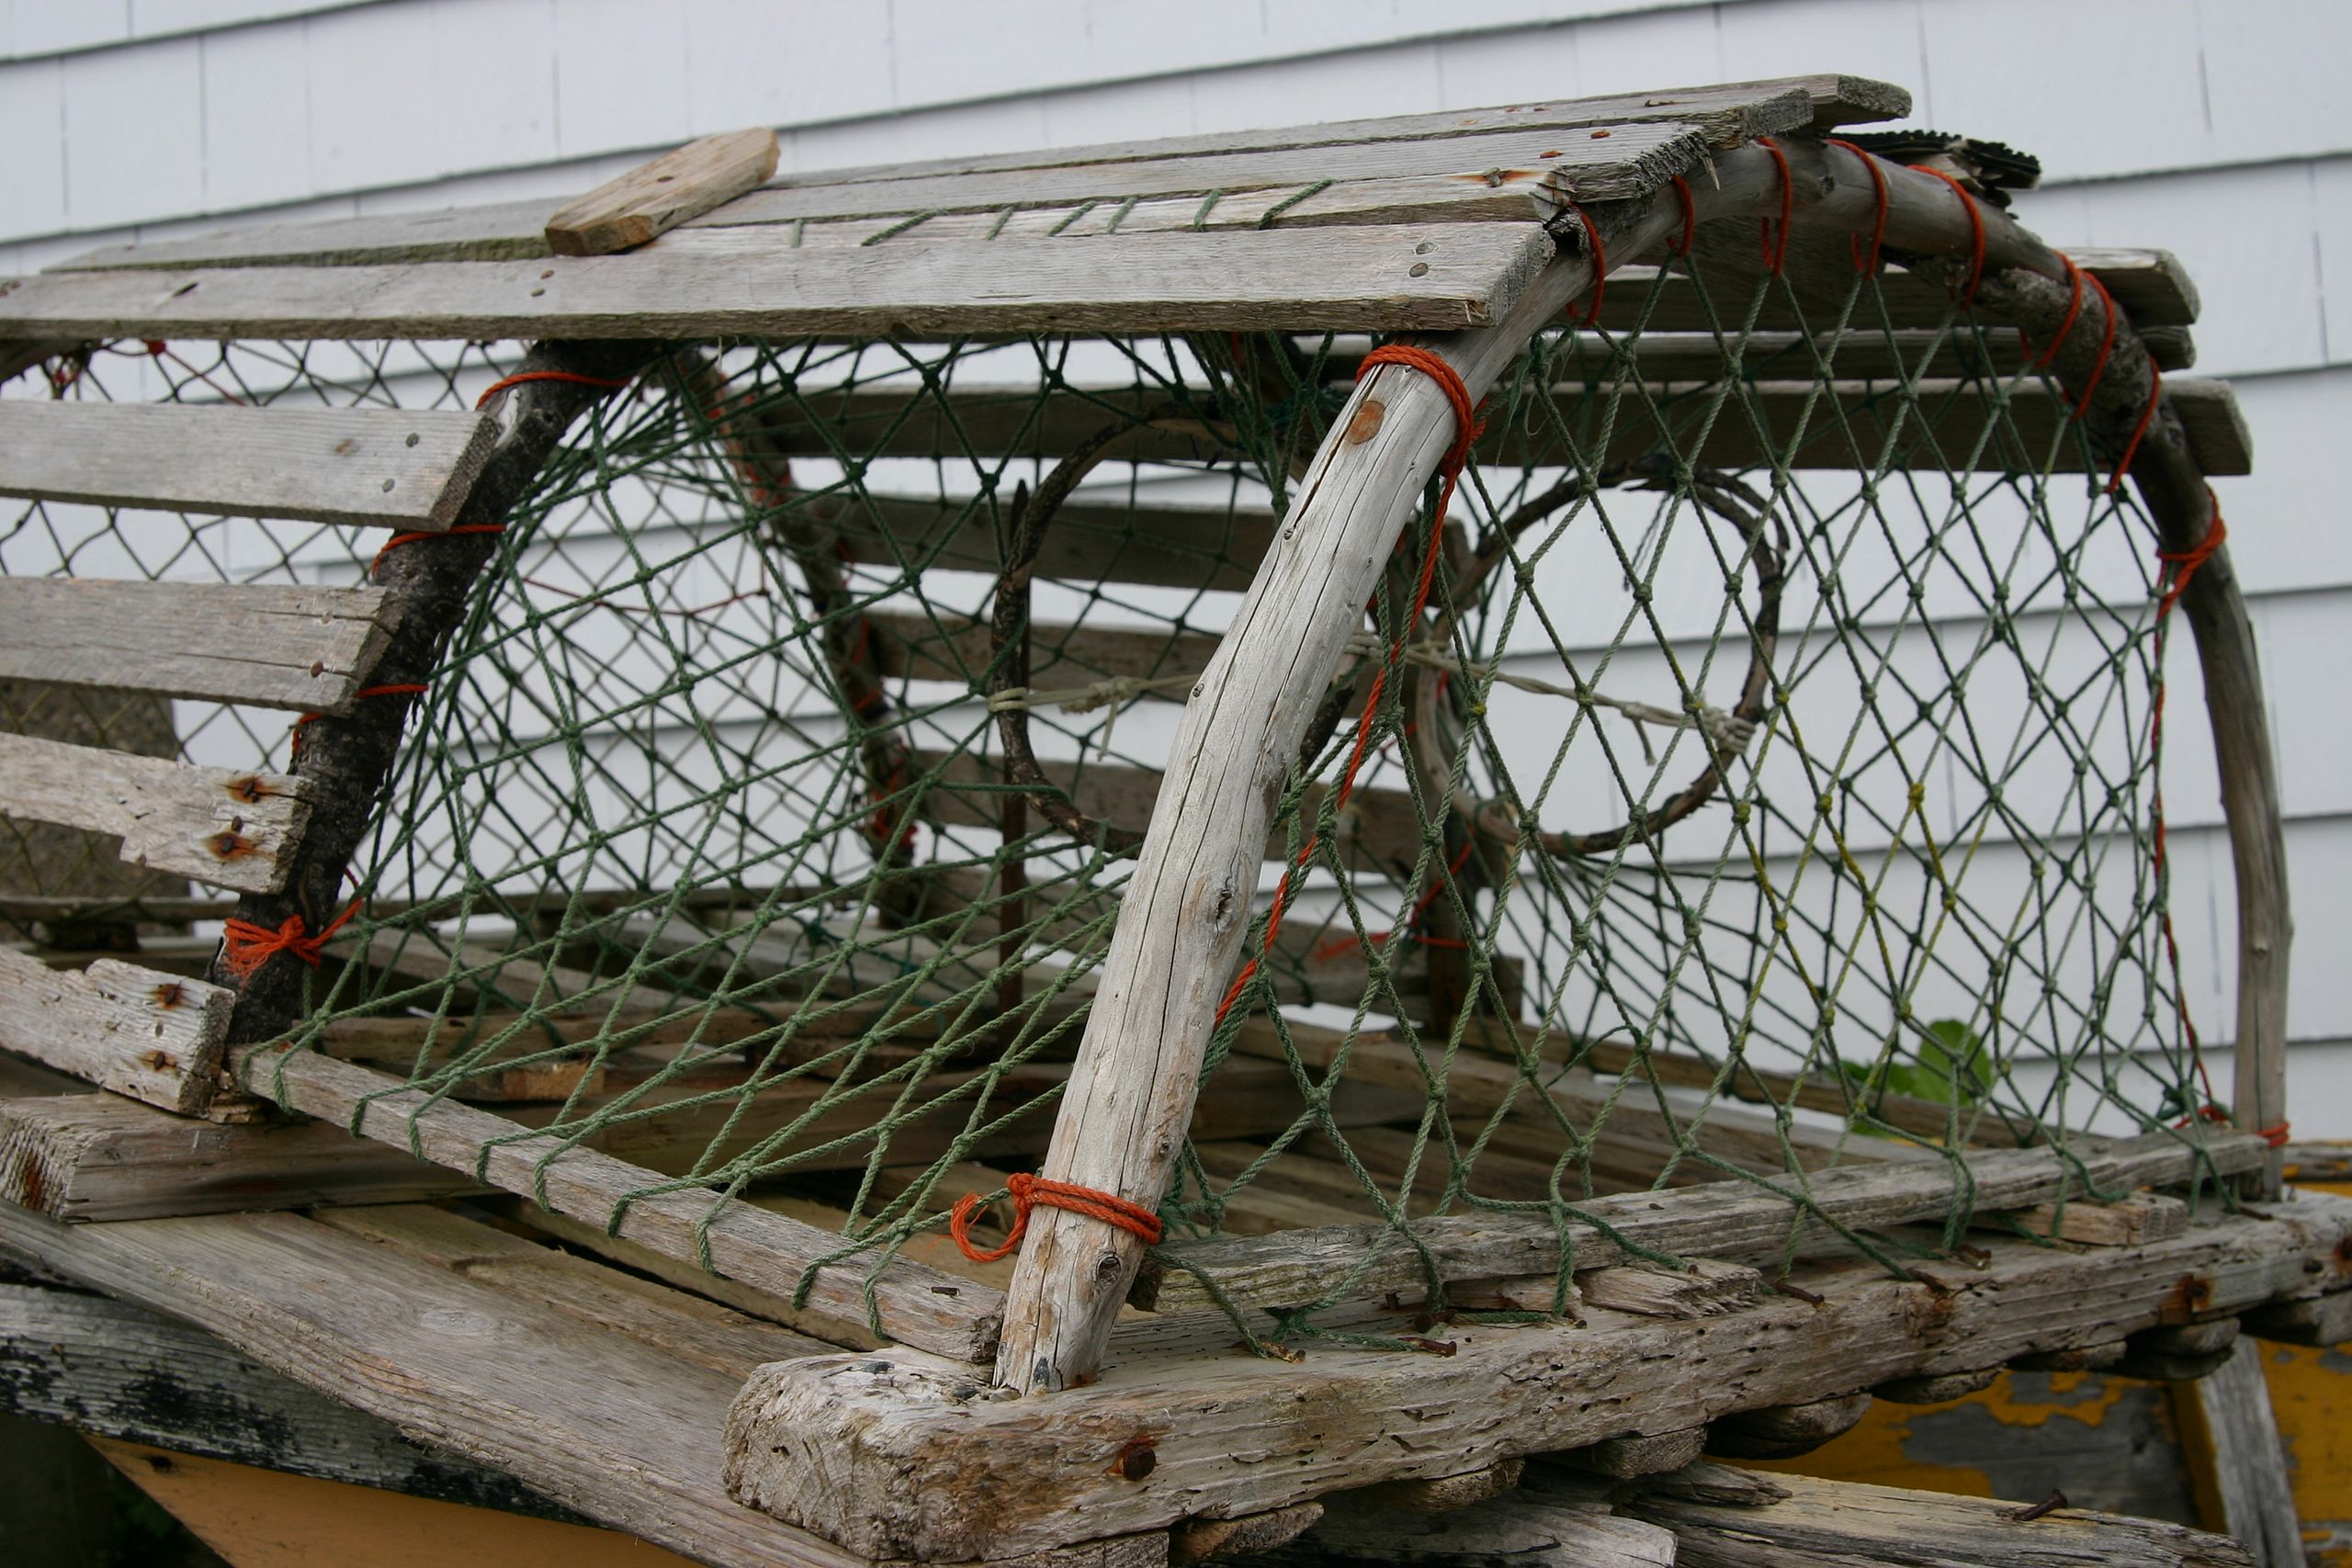 File:Lobster trap.jpg - Wikipedia